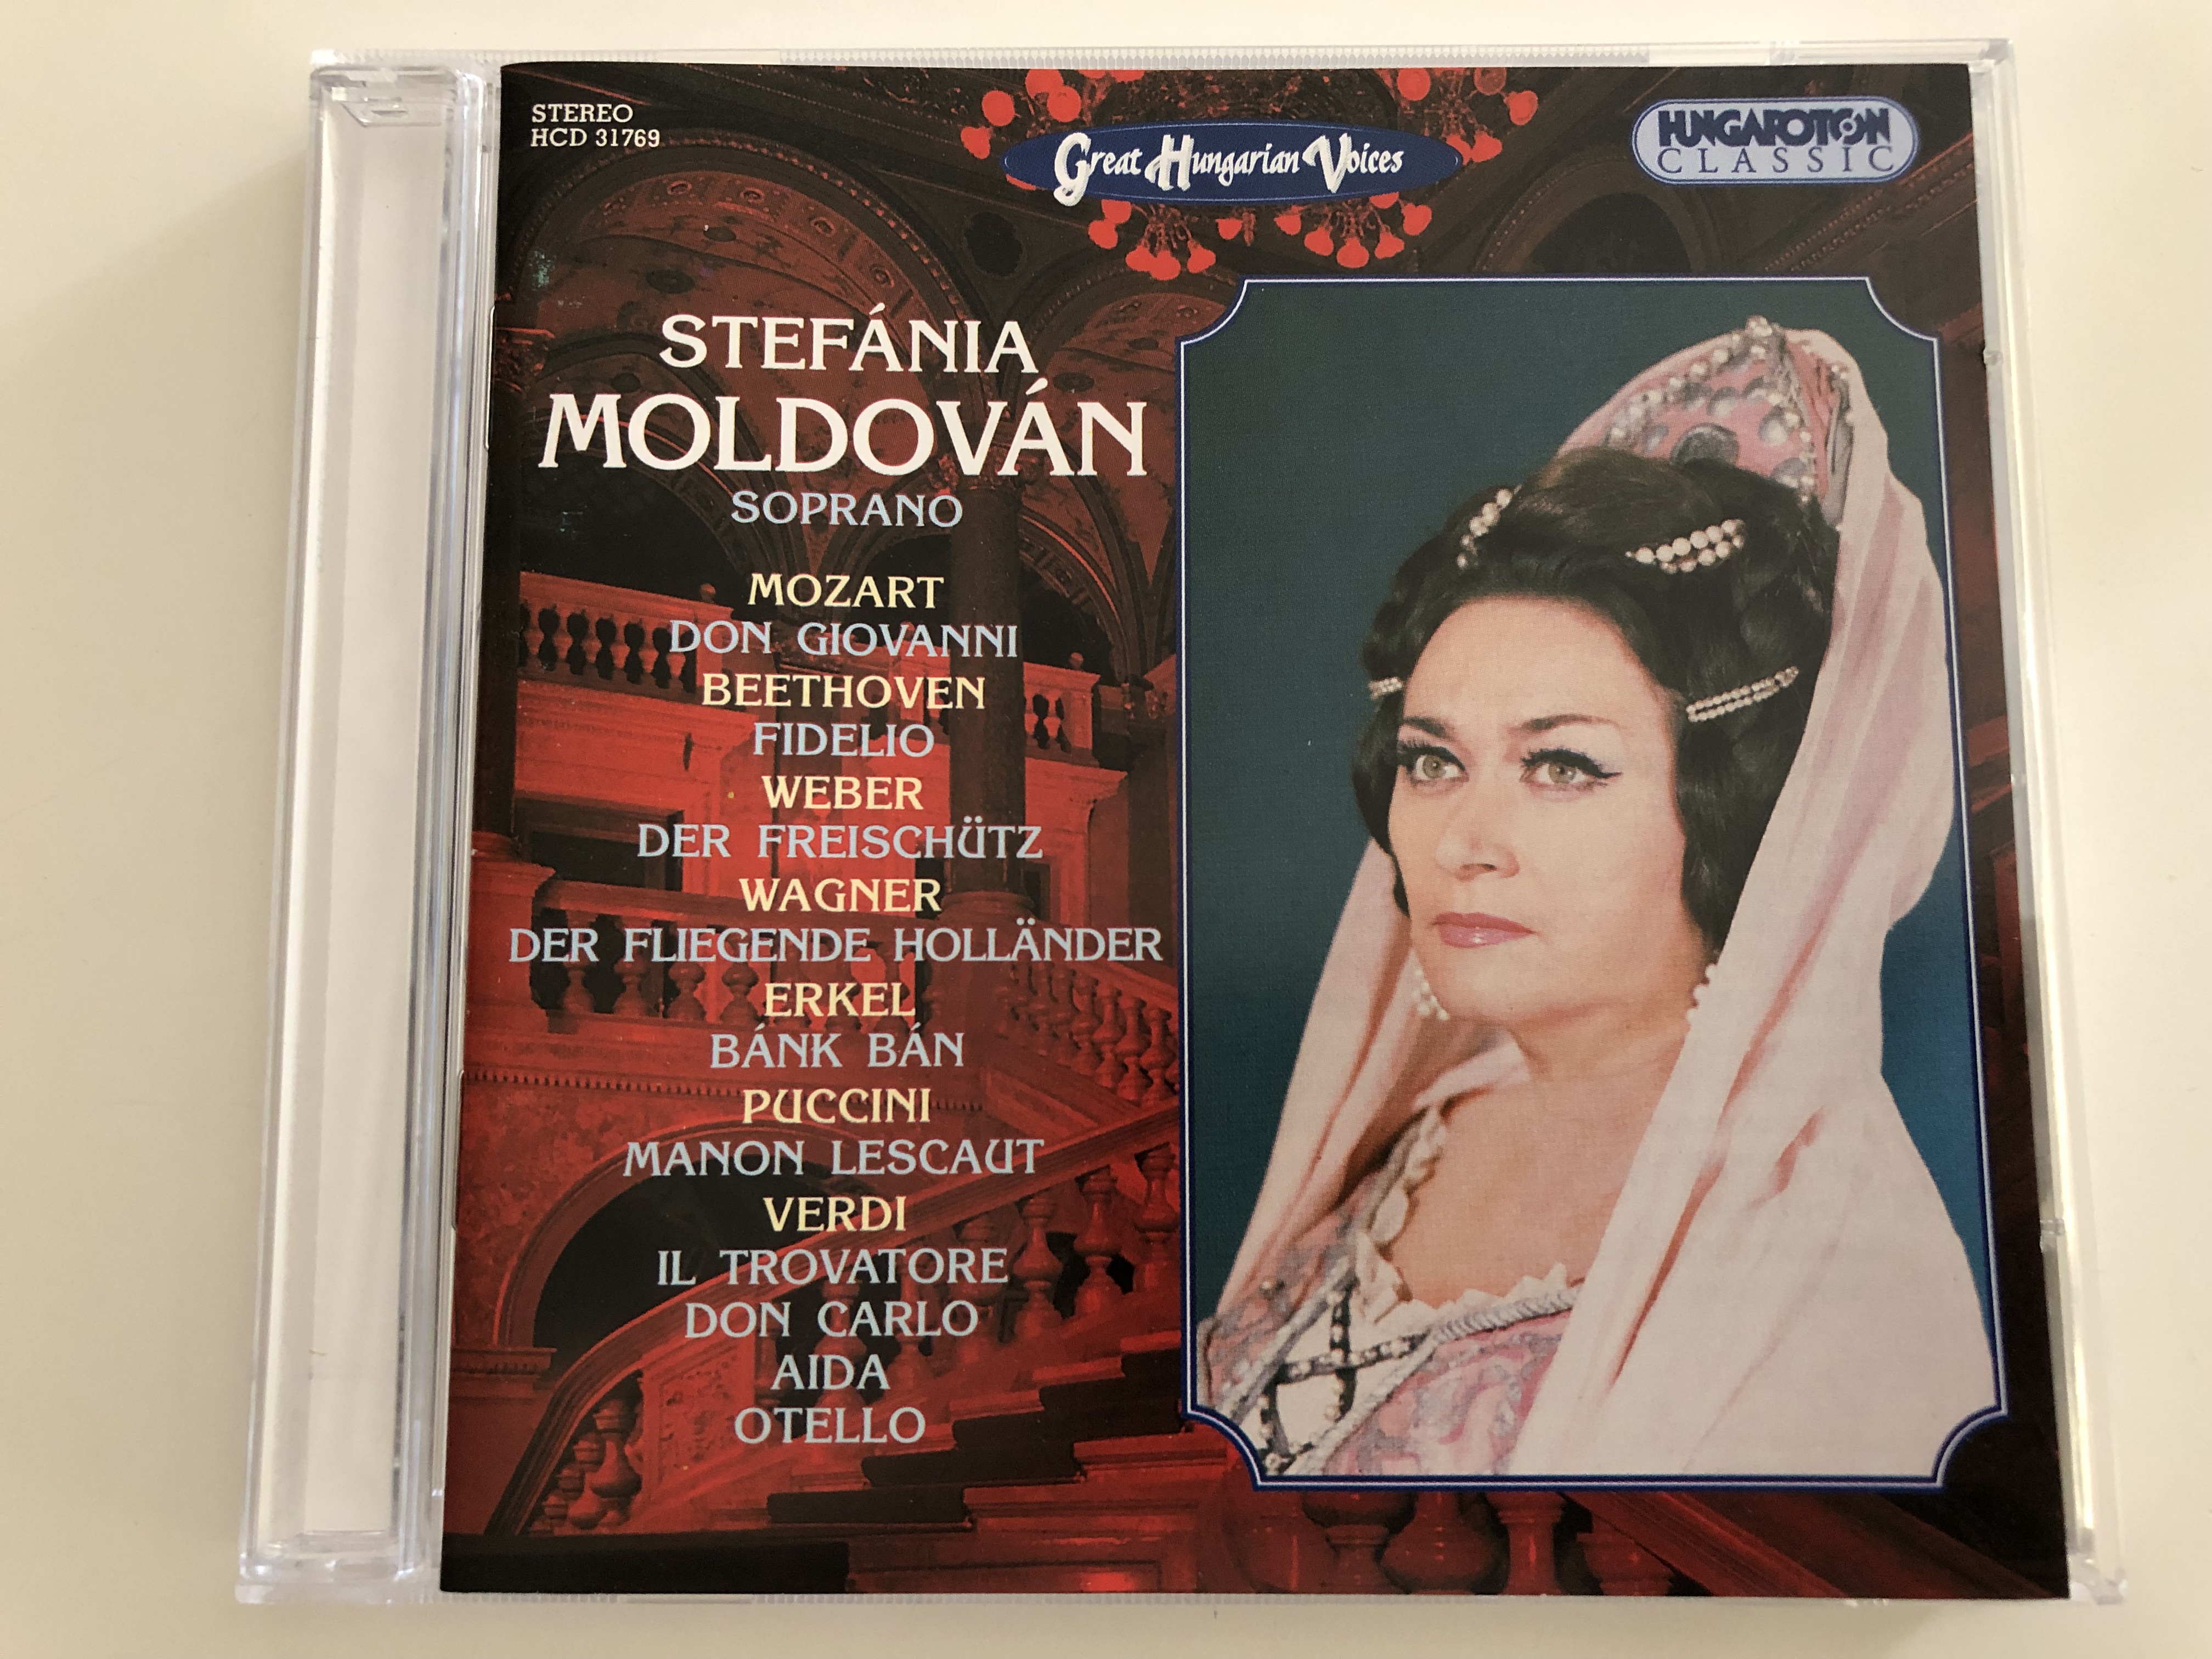 stef-nia-moldov-n-soprano-great-hungarian-voices-mozart-beethoven-weber-wagner-erkel-puccini-verdi-hungaroton-classic-audio-cd-1997-hcd-31769-1-.jpg